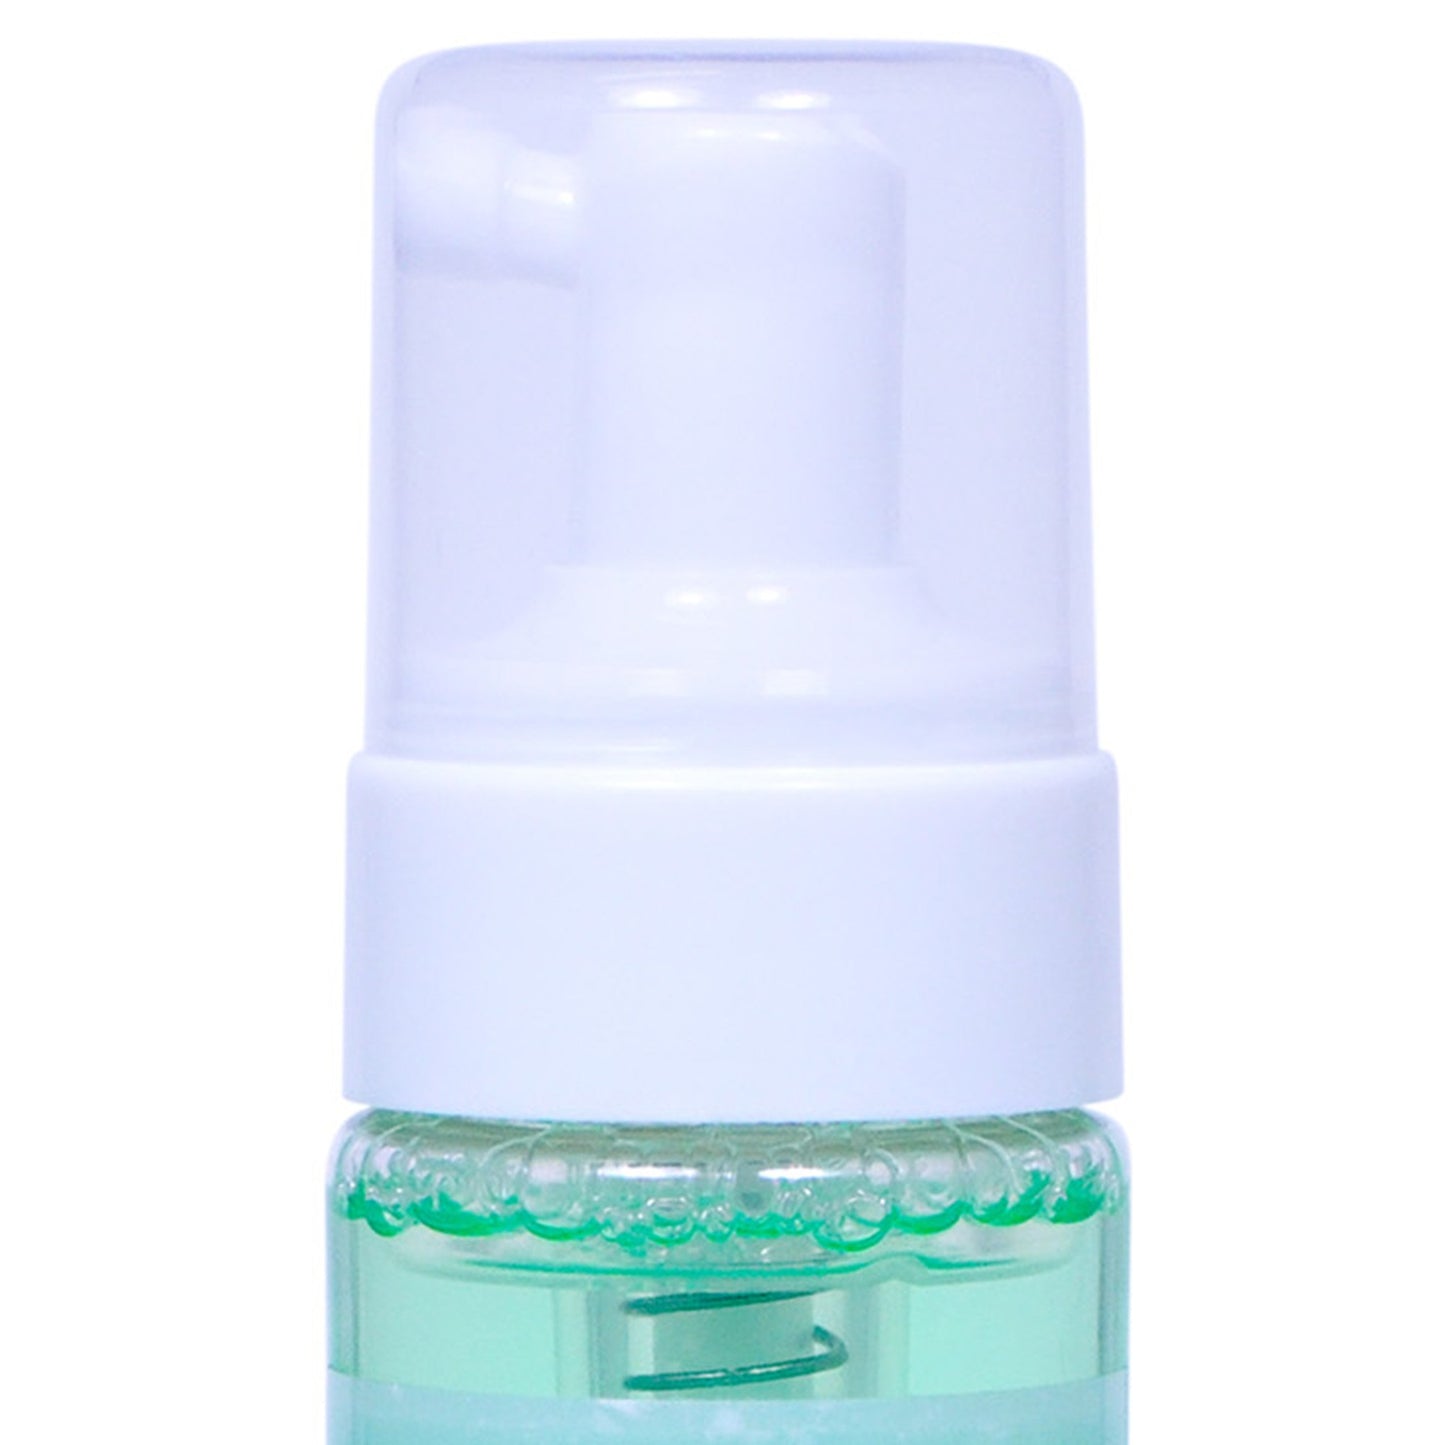 DermaRite Rinse-Free Body Wash Renew Foaming 8 oz. Pump Bottle - 00420